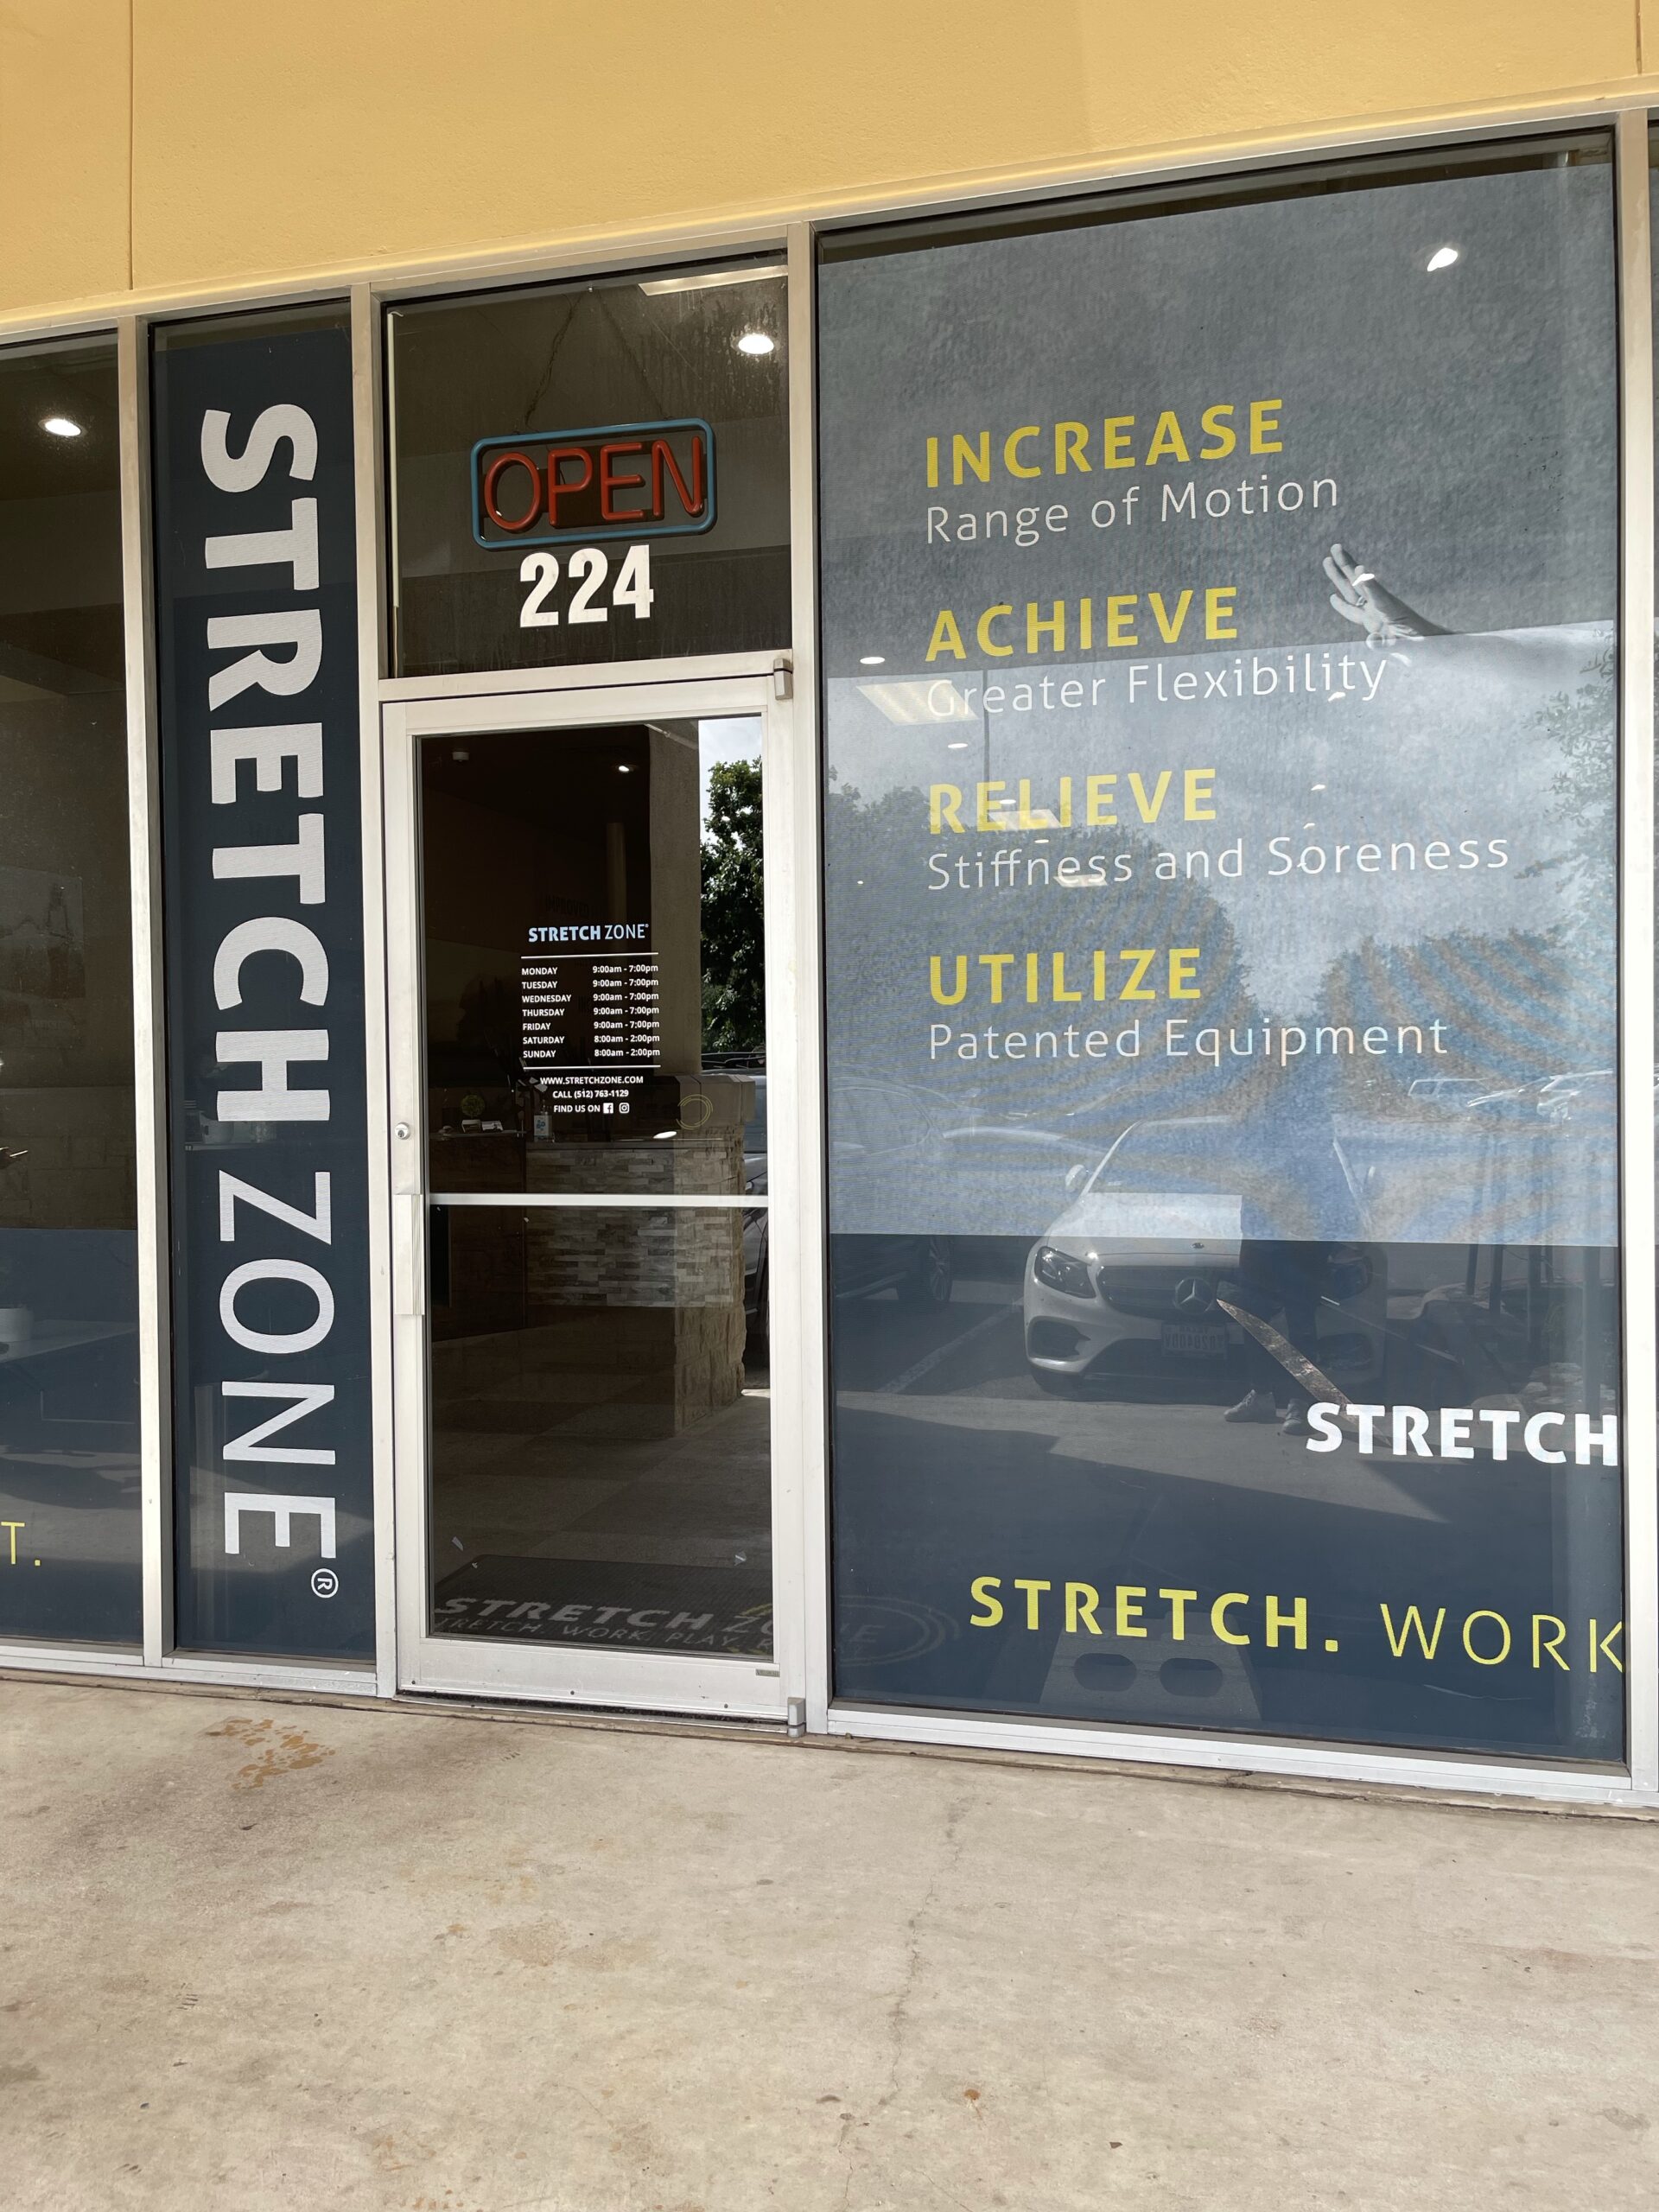 StretchZone Georgetown, improve flexibility